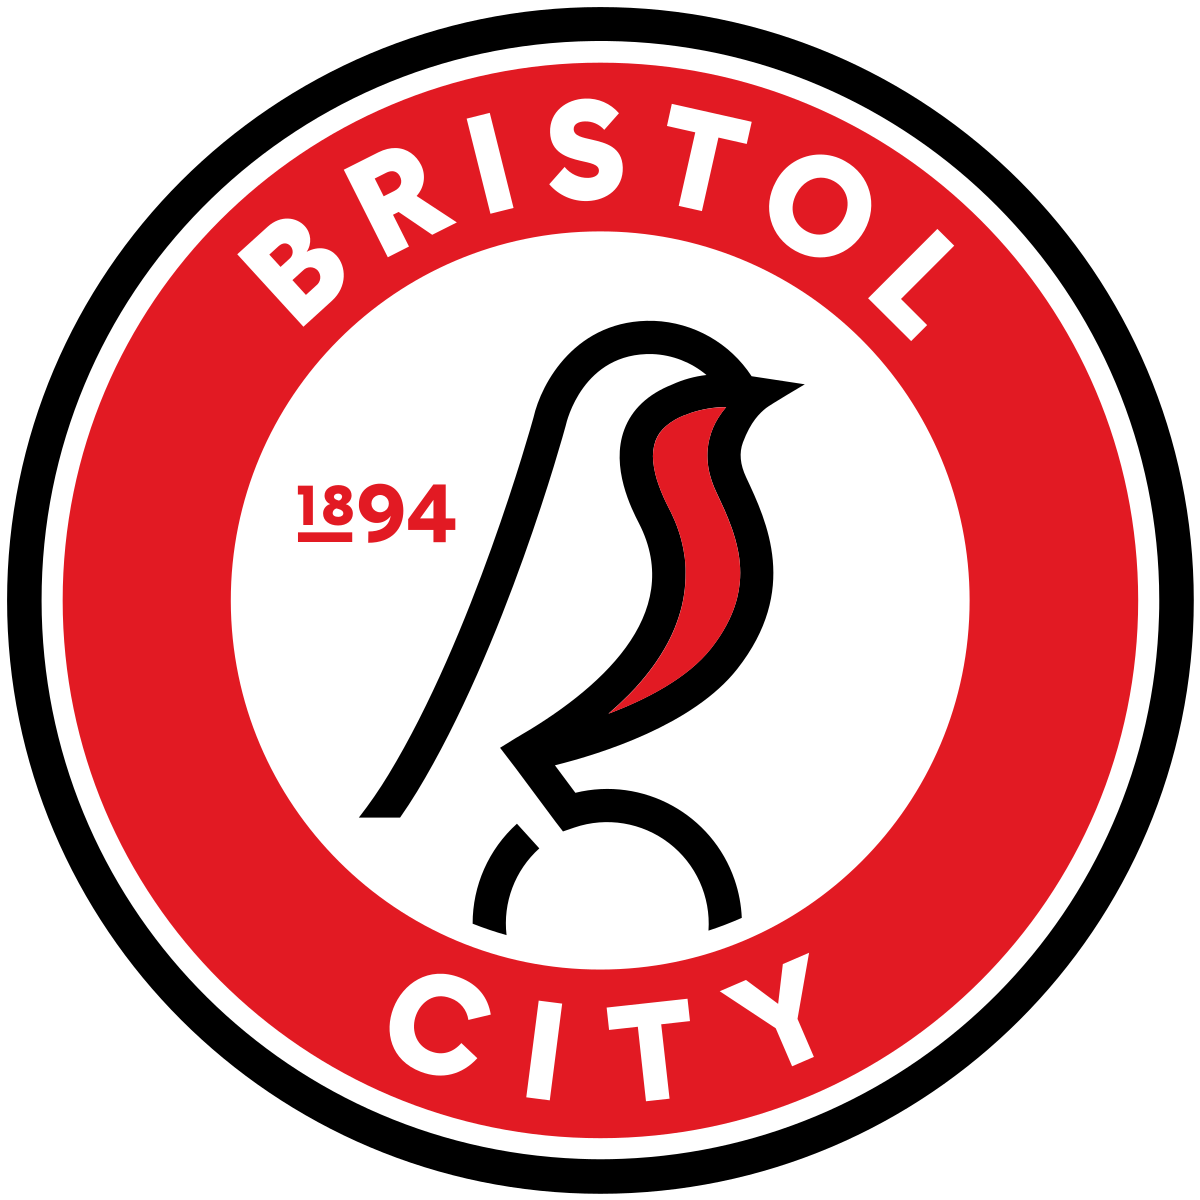 Bristol City v Coventry City - Hospitality